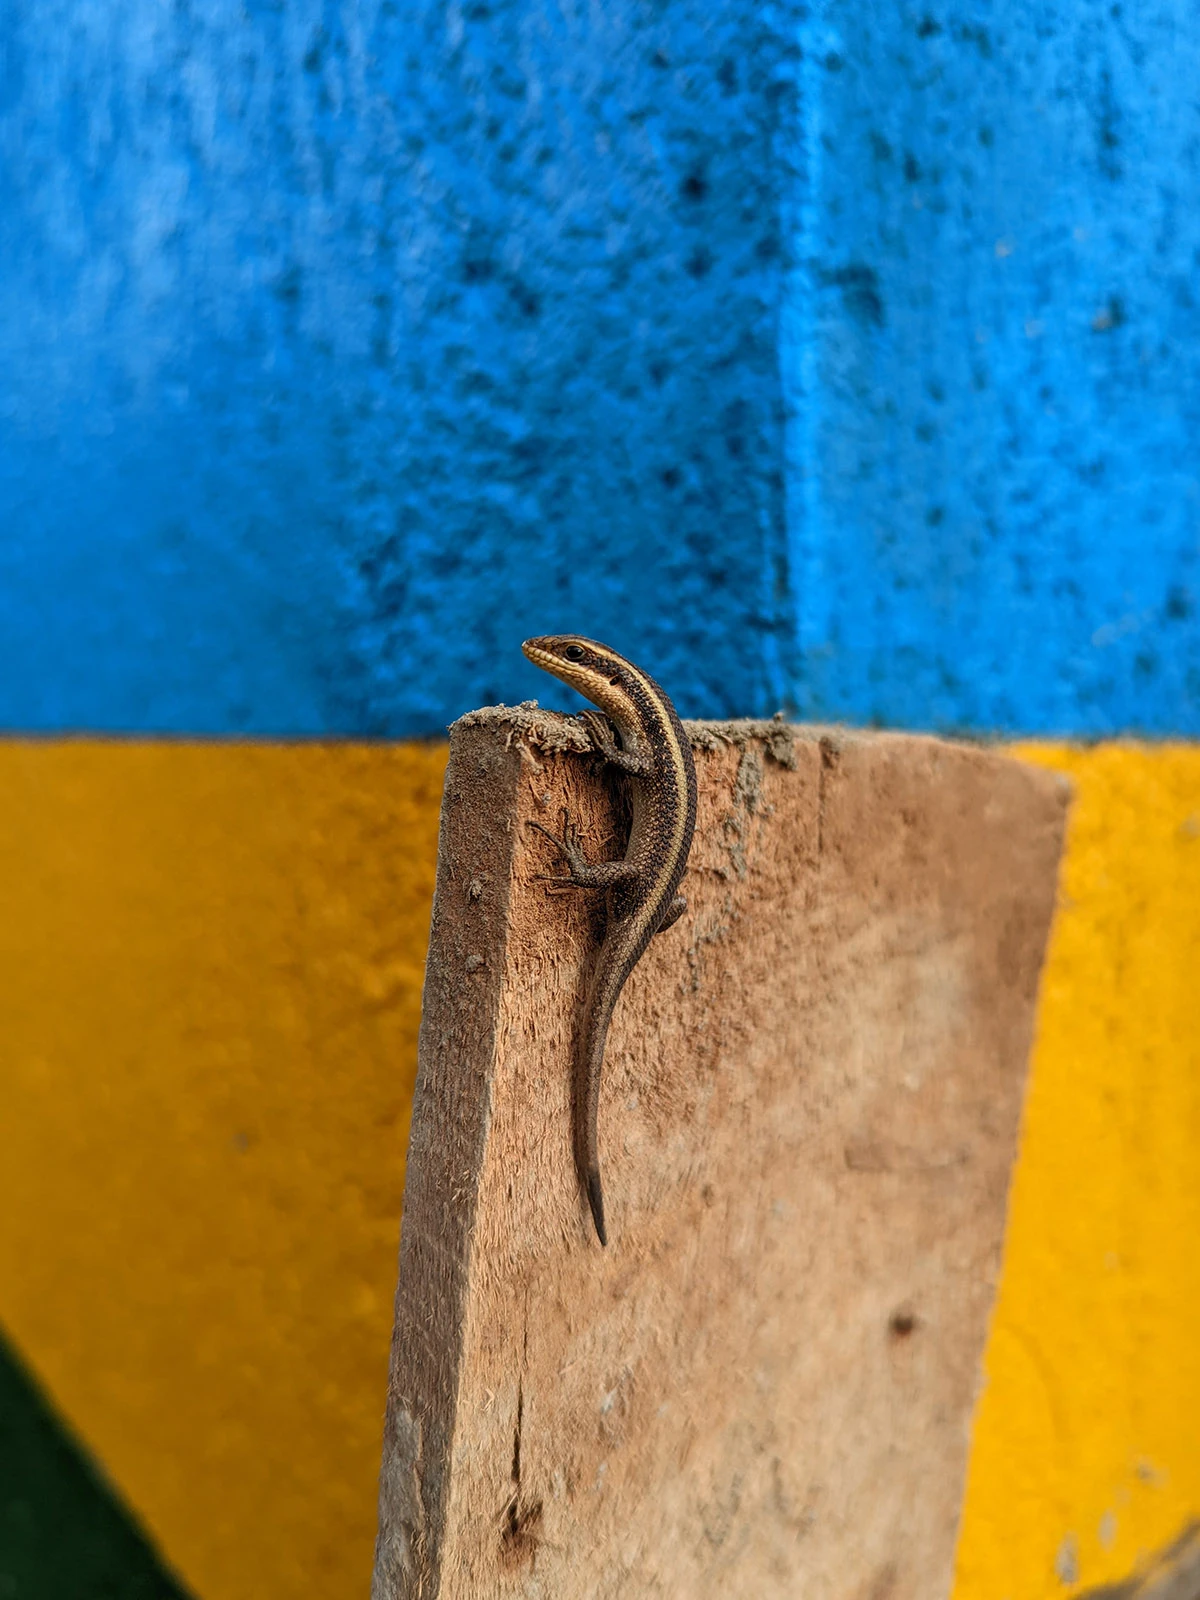 small lizard on footbridge construction site